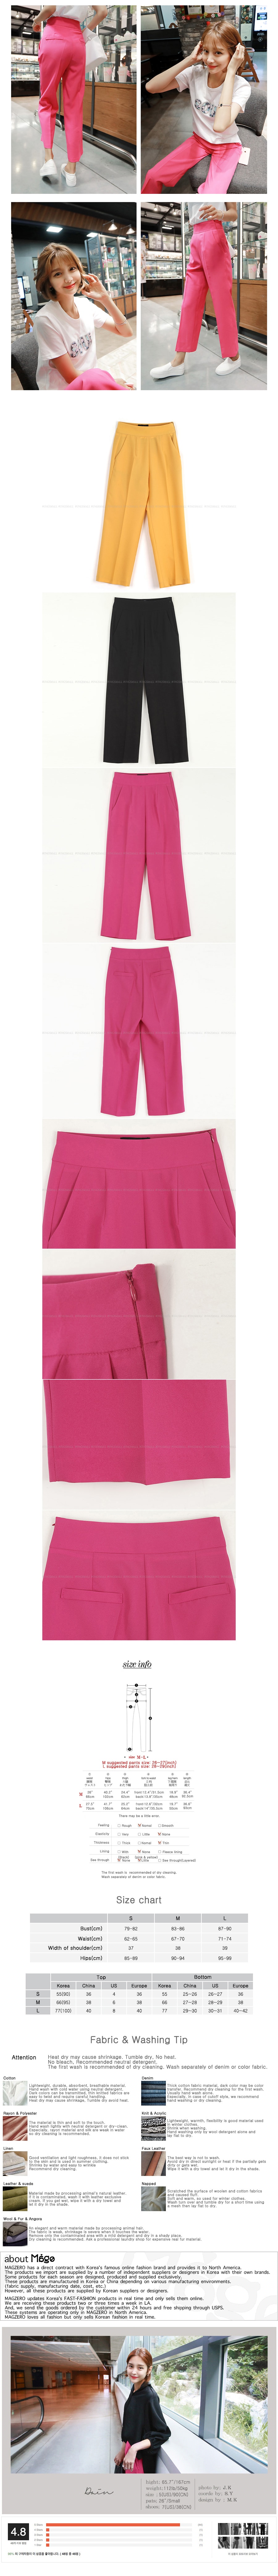 KOREA High Waist Career Suit Pants #Hot Pink M(26-27) [Free Shipping]